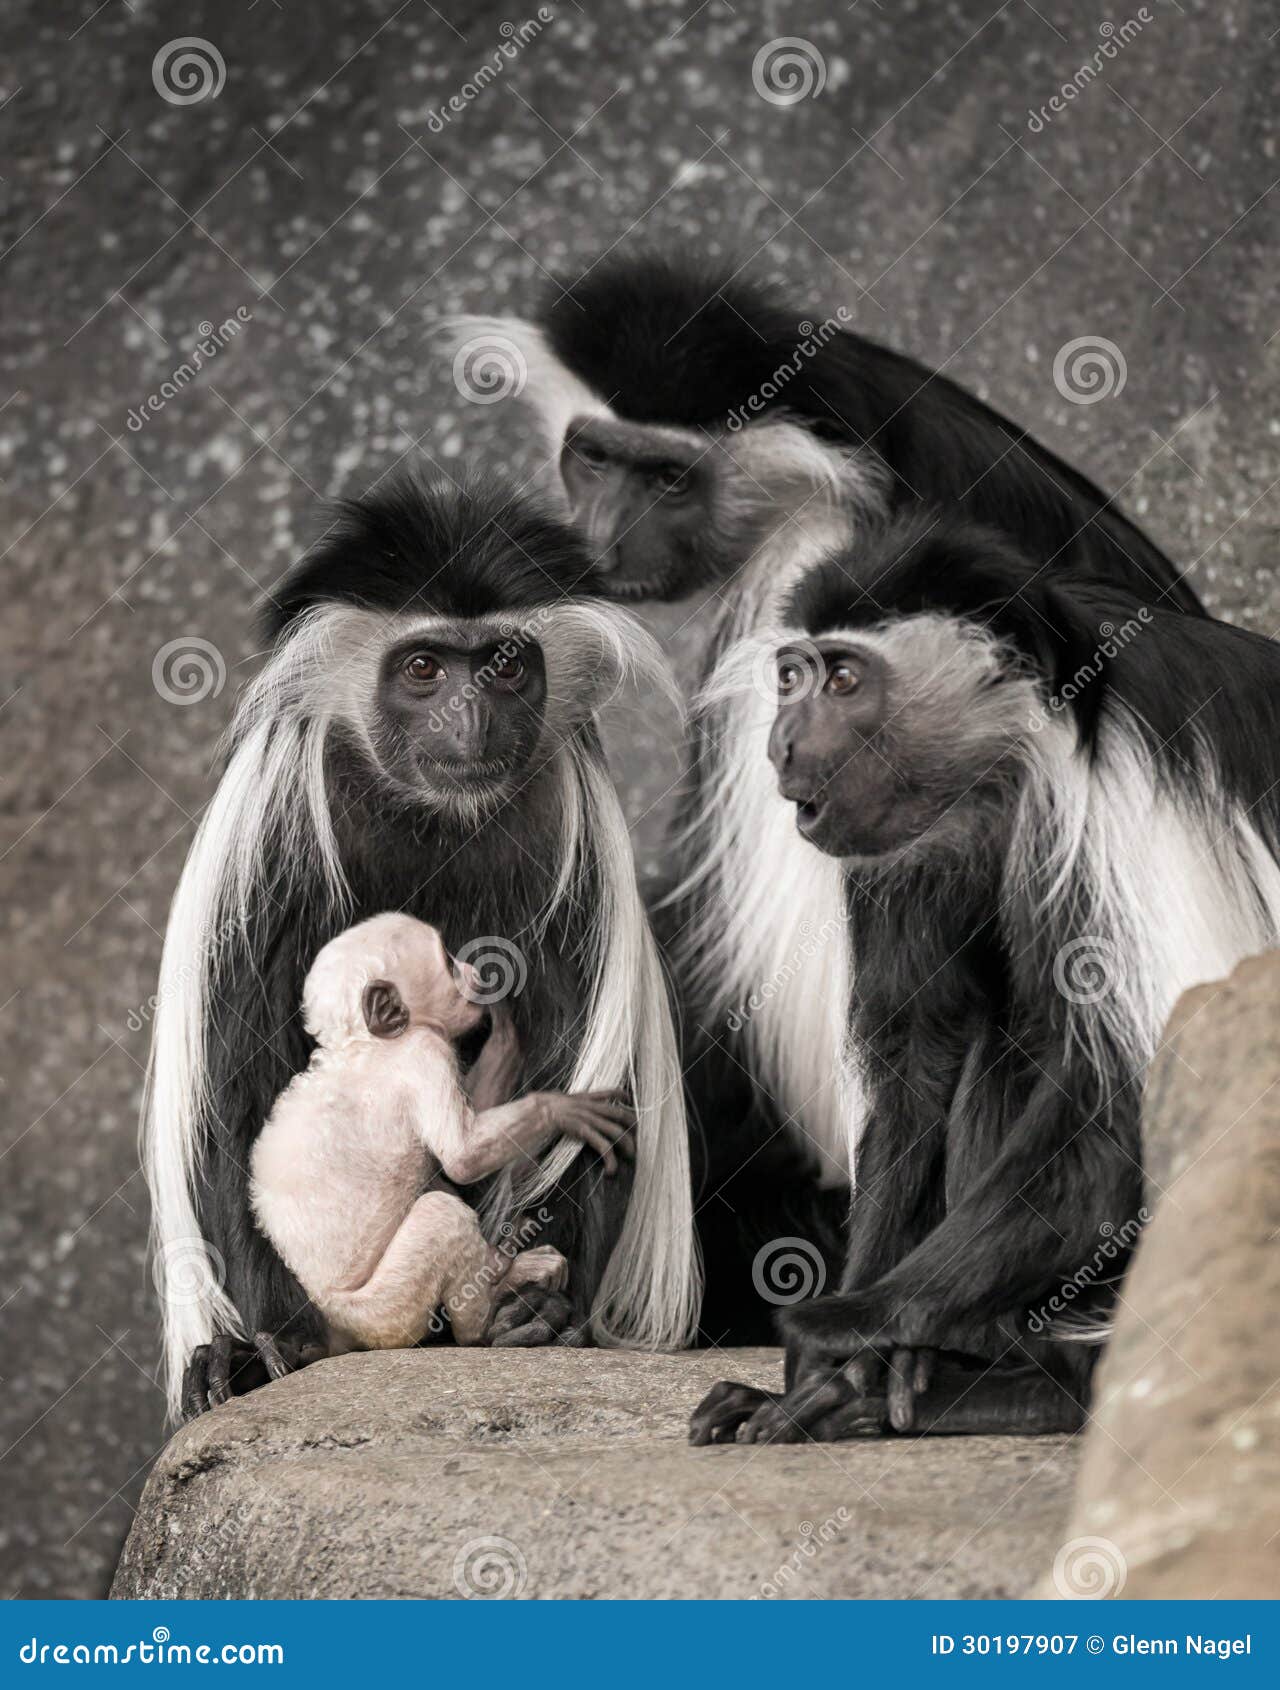 colobus monkey family portrait